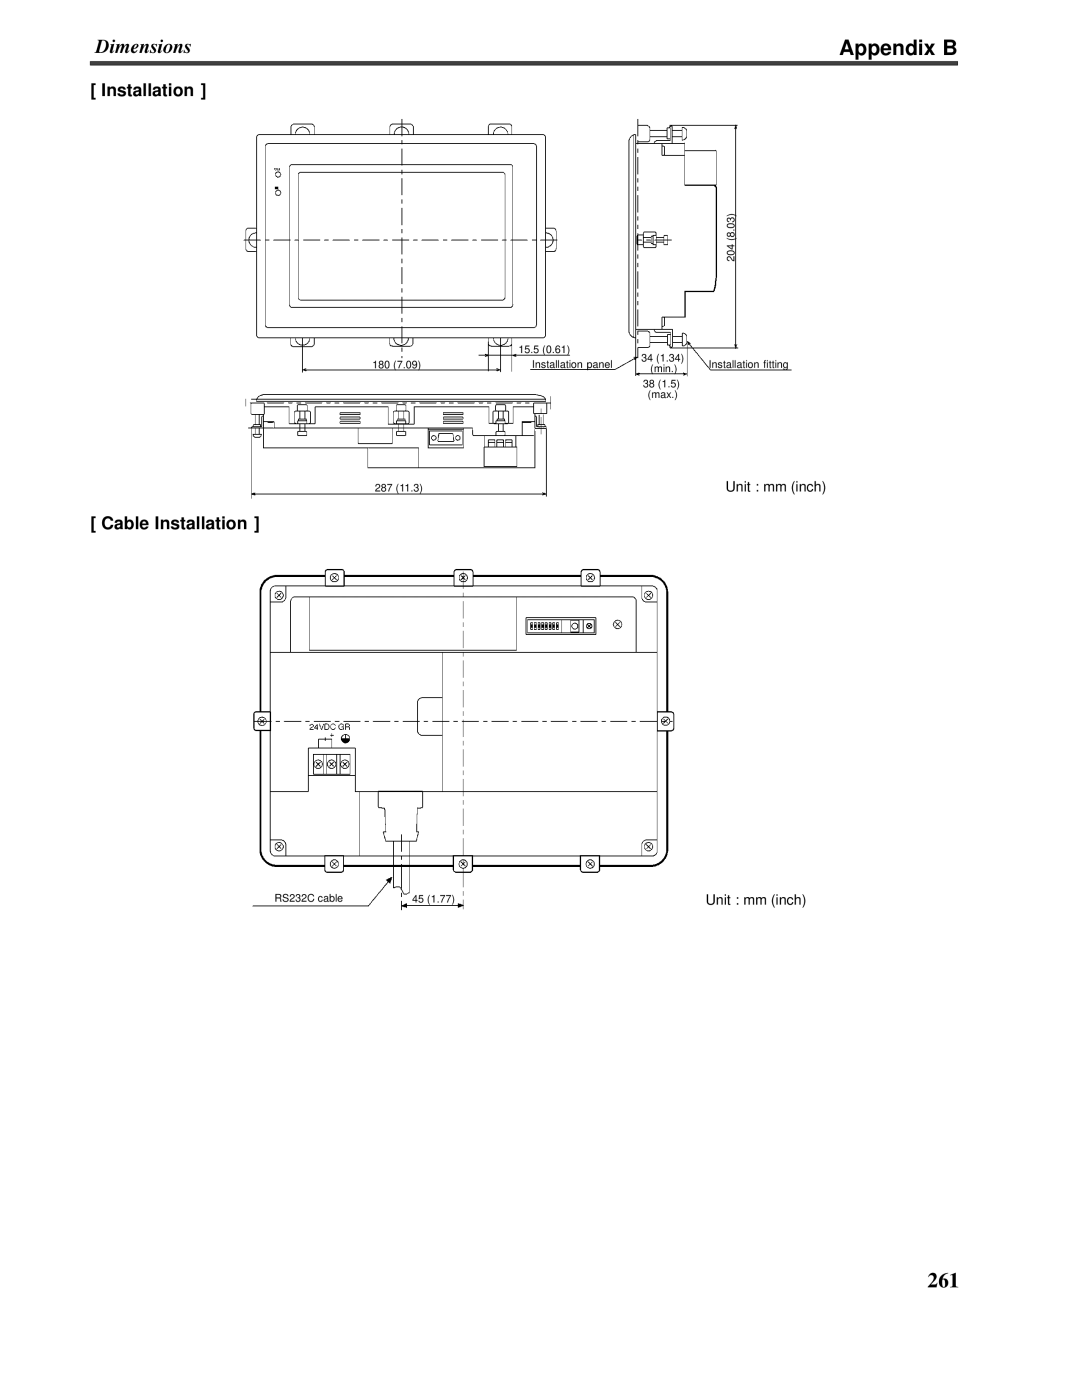 Omron V022-E3-1 operation manual Appendix B, Cable Installation, Unit : mm inch 